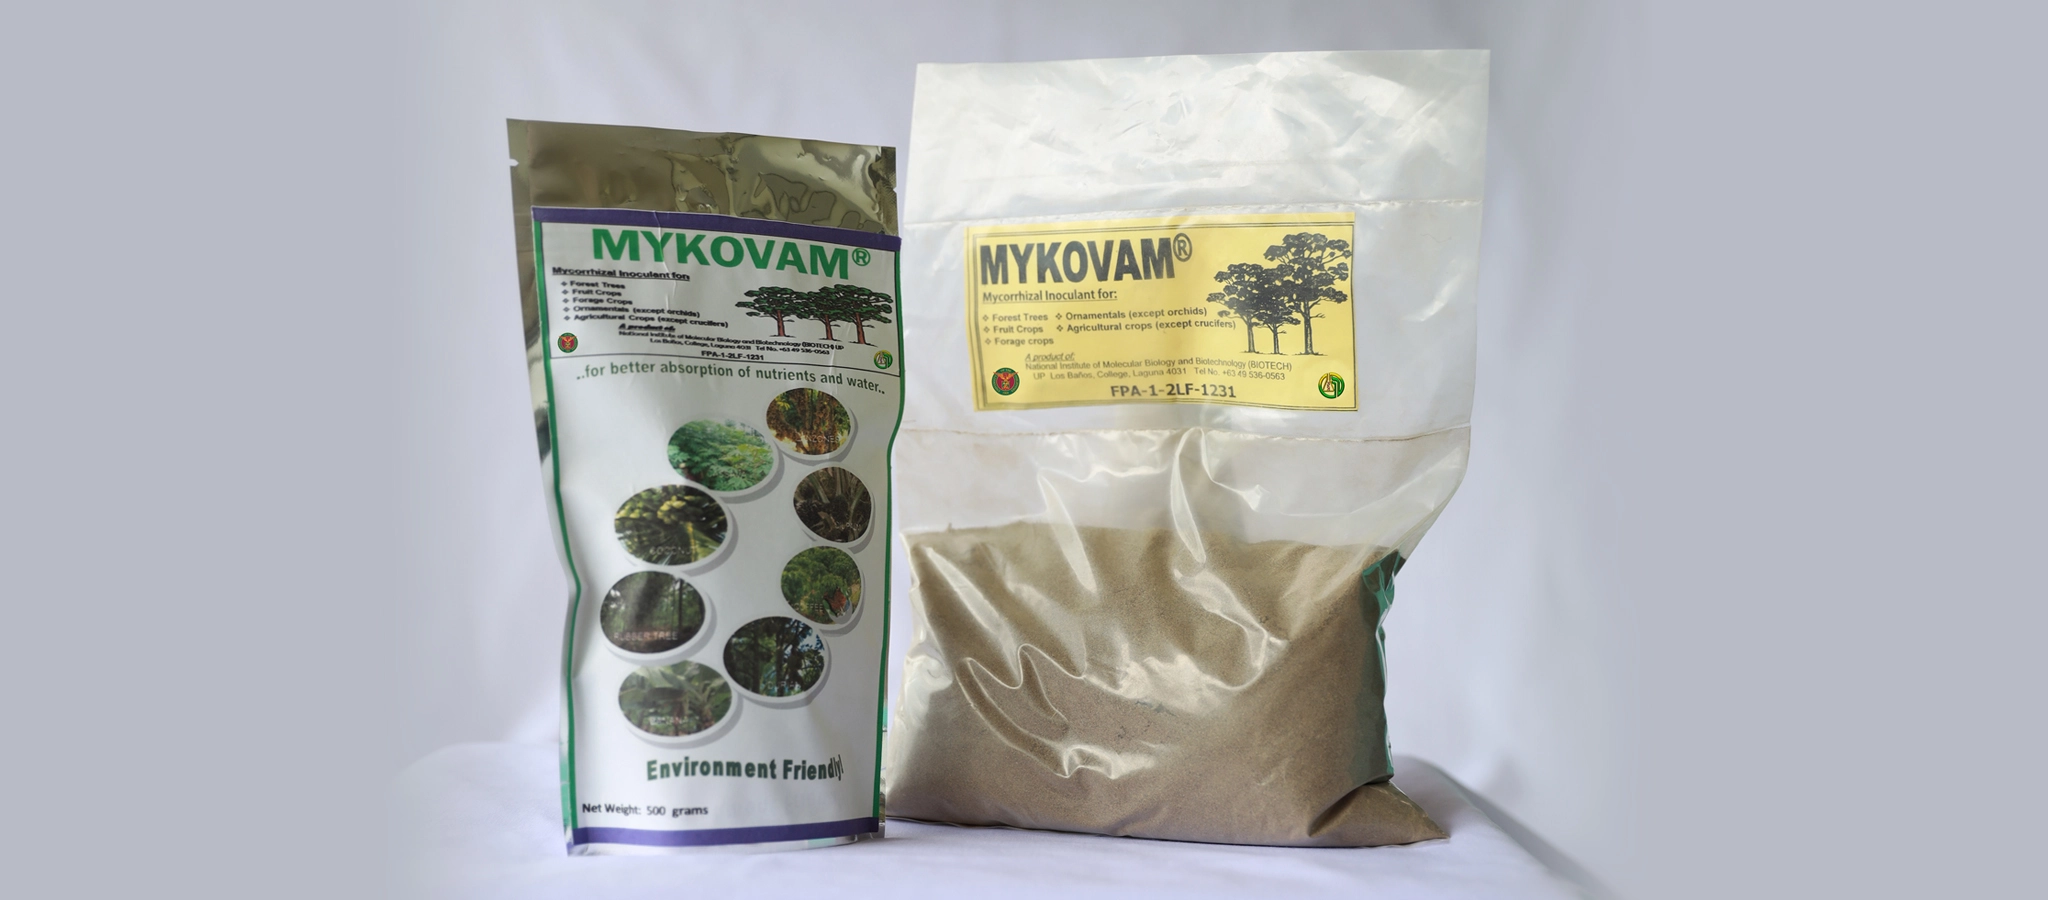 It’s alive! Mykovam, the hardworking biofertilizer